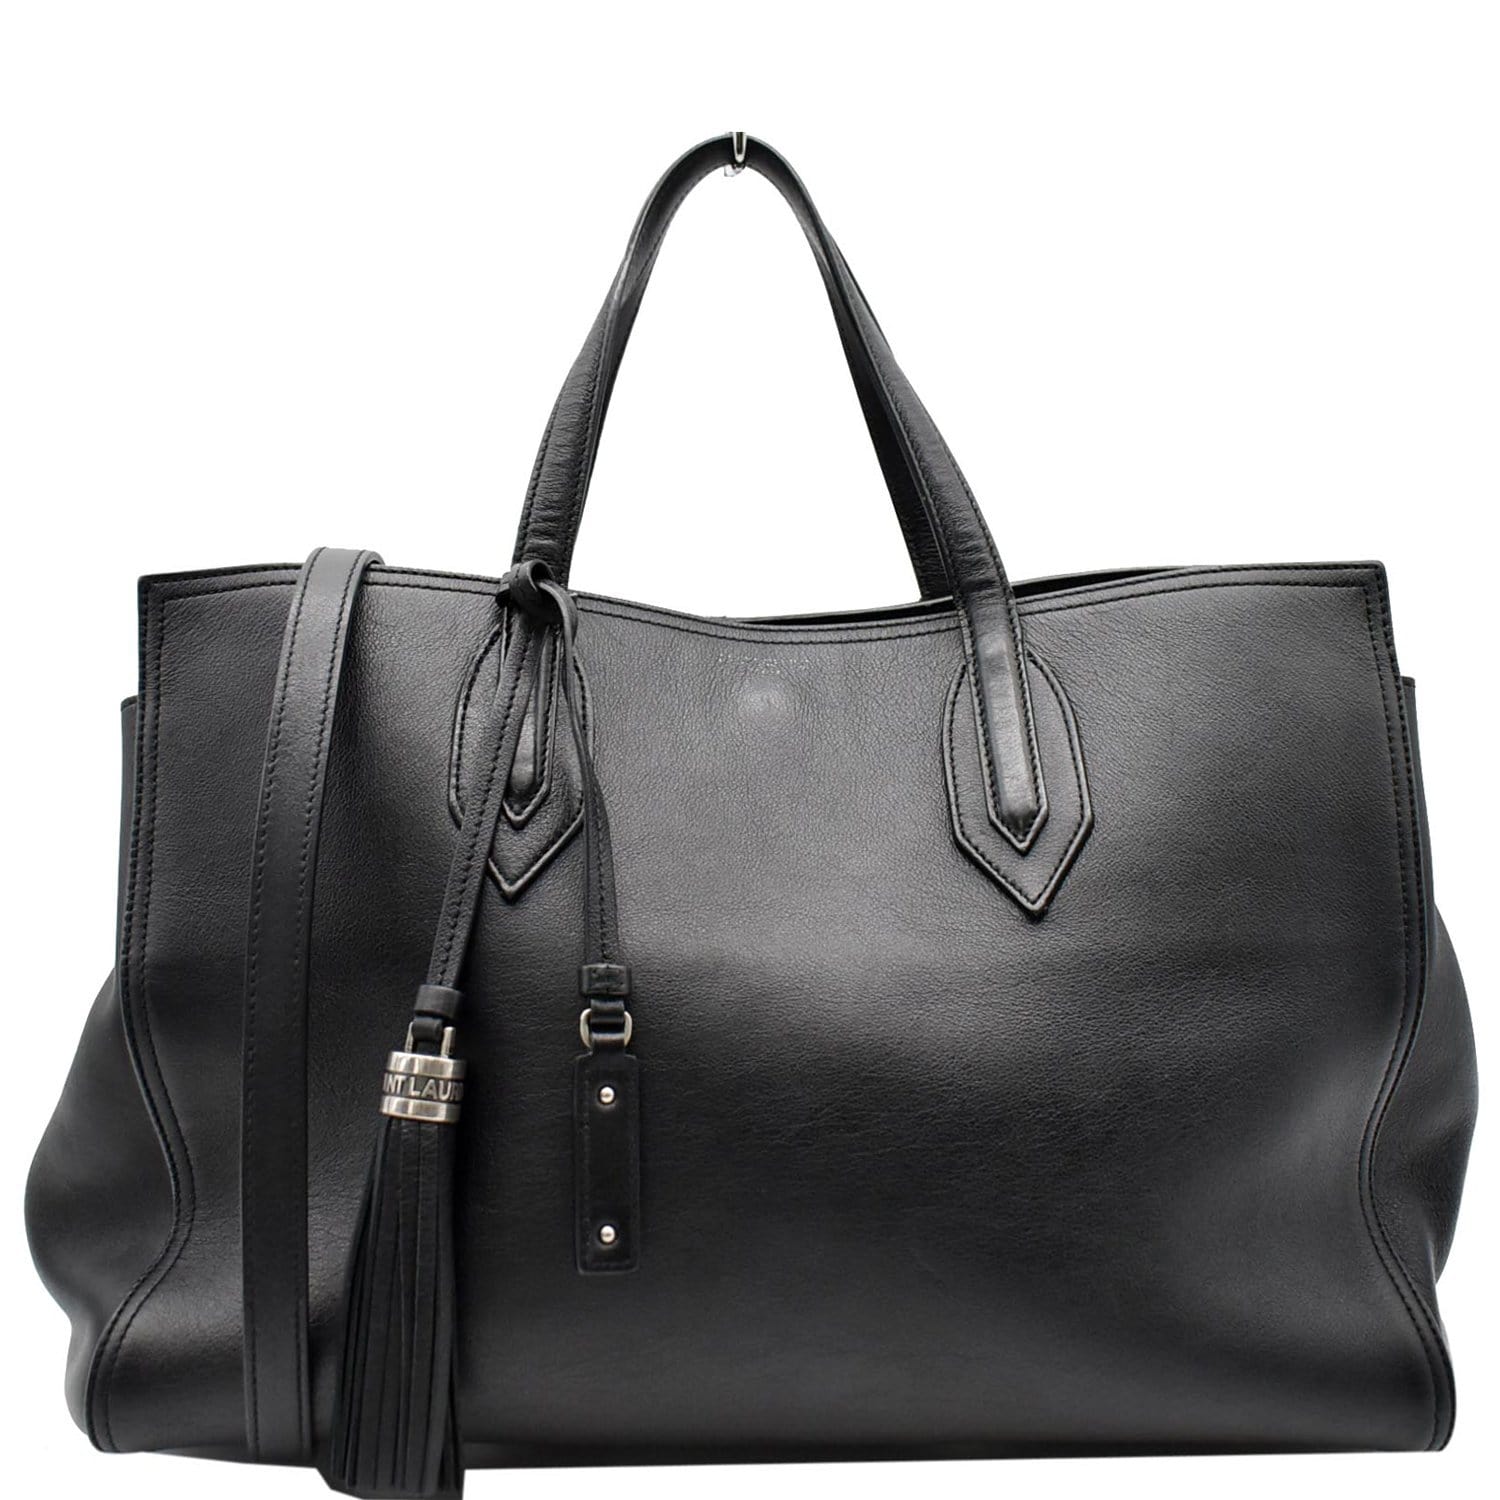 Saint Laurent Leather Tote Bag